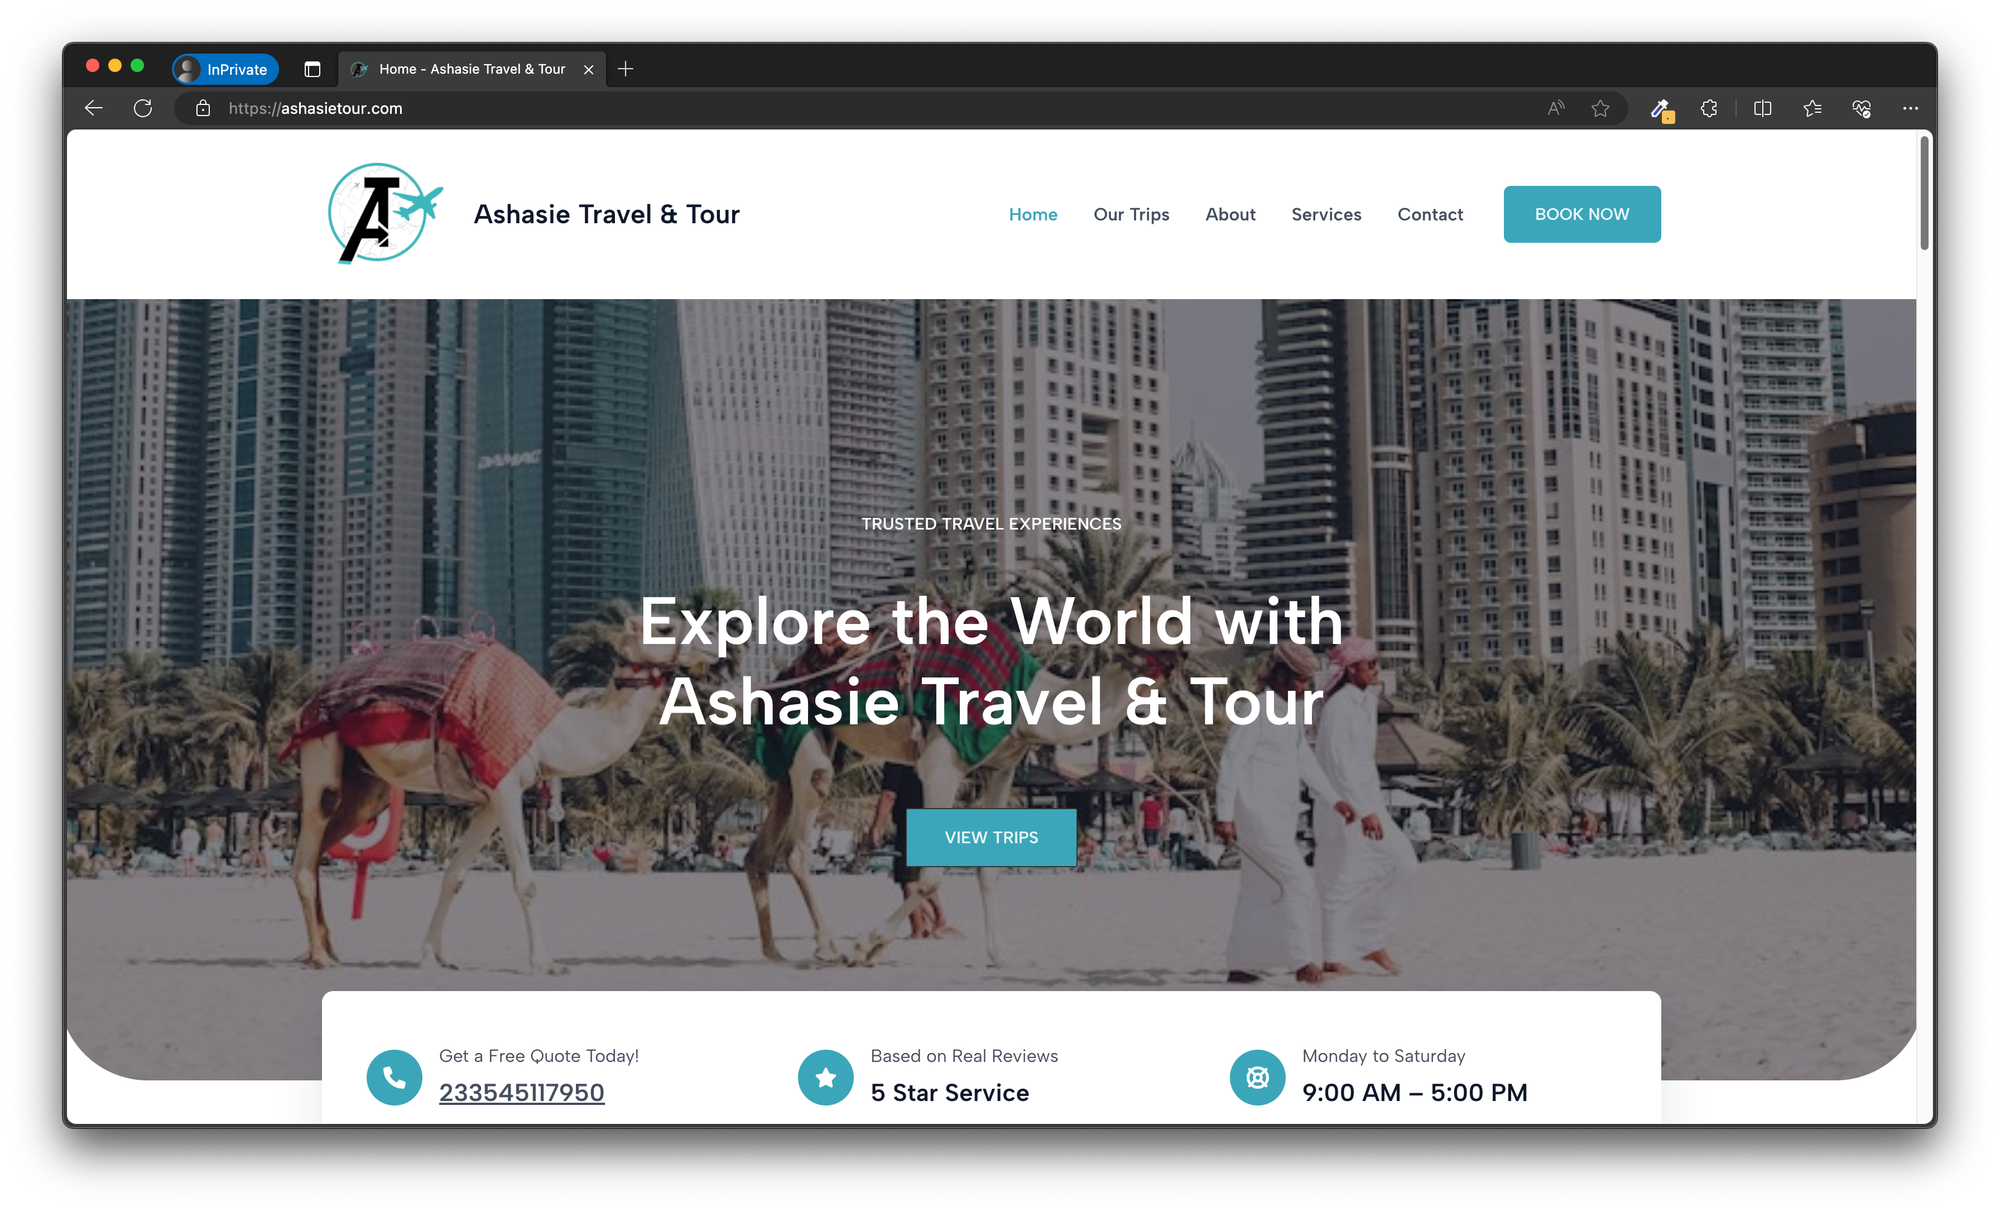 Ashasie Travel & Tour Website Design Case Study